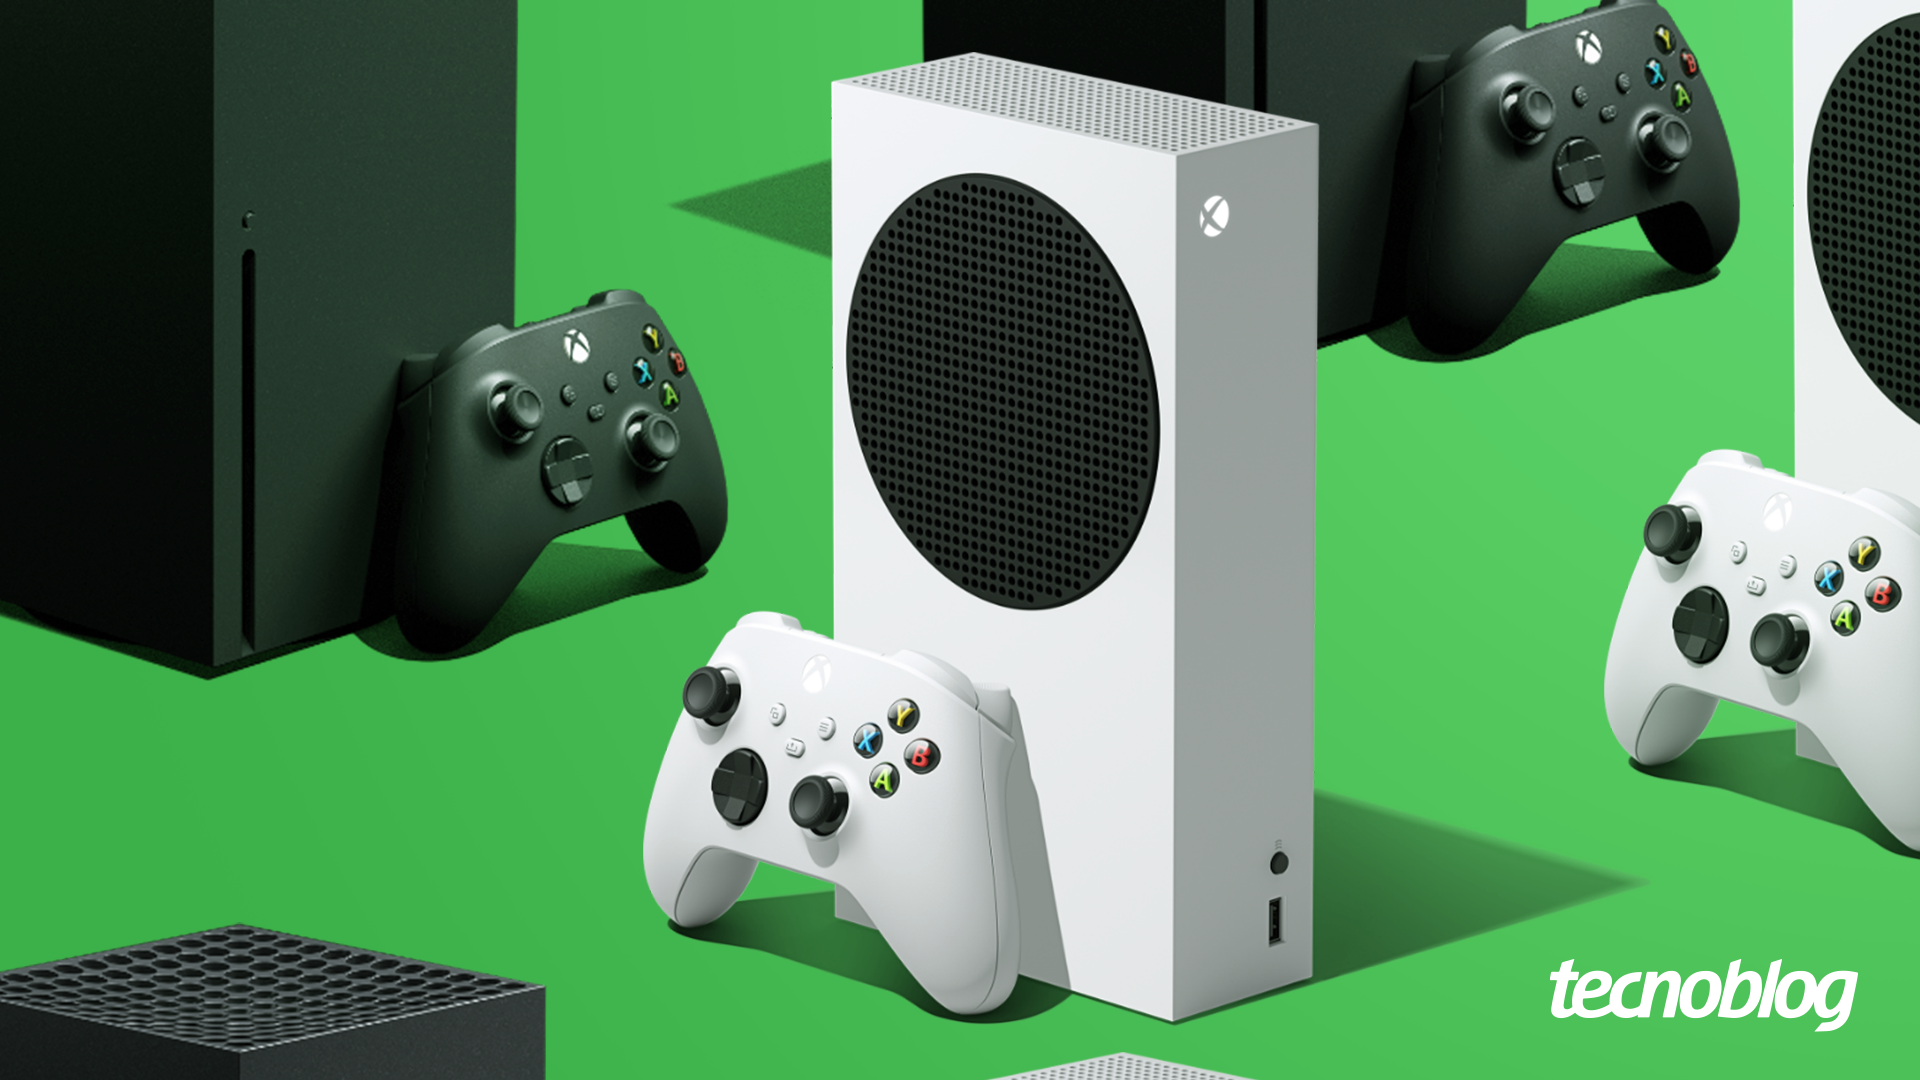 Xbox 360 Brasil  Novos jogos no canal de telegram pra baixar pro seu Xbox  bloqueado